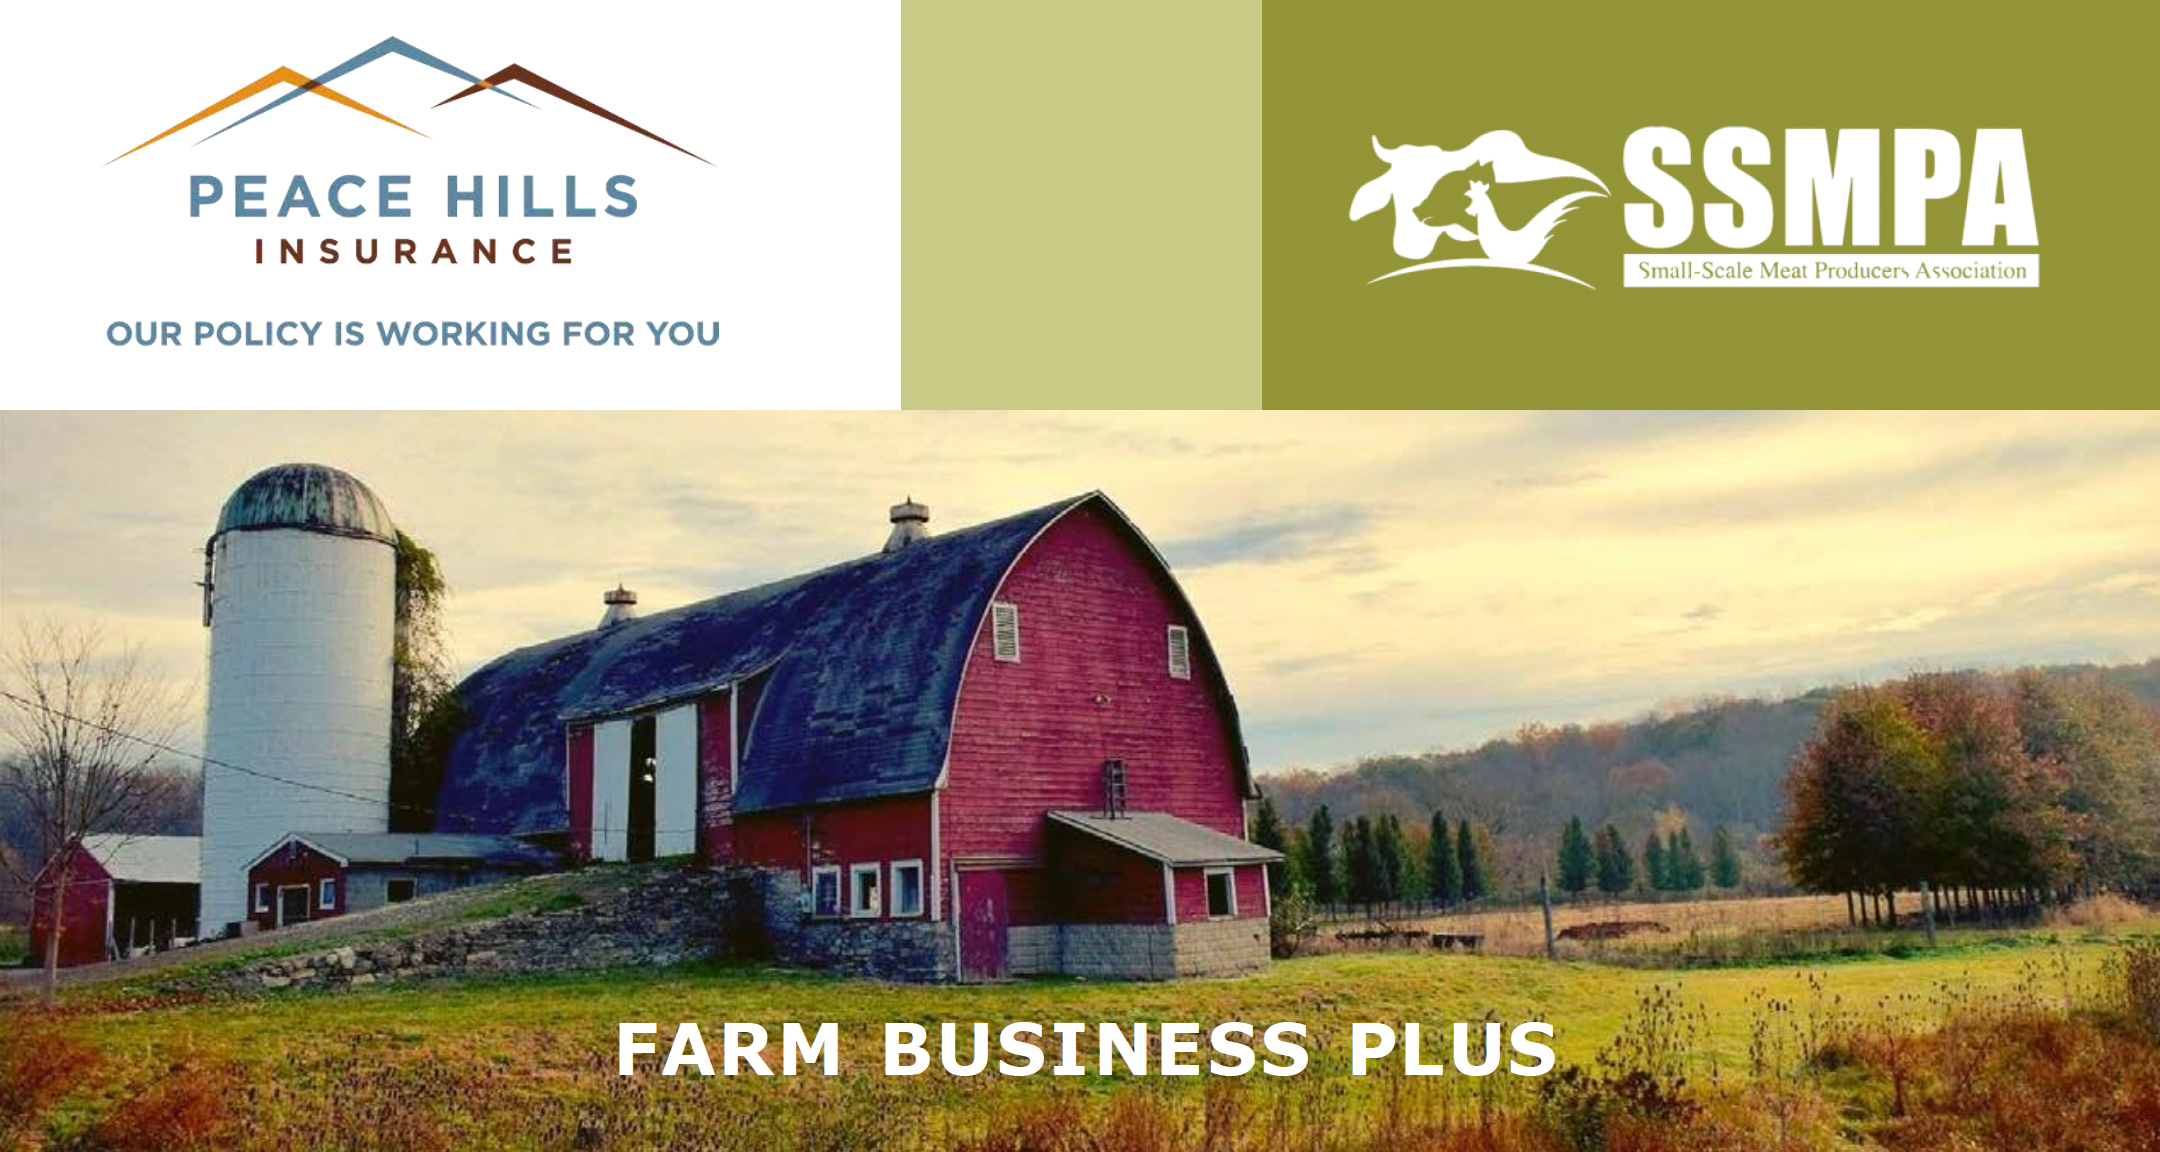 SSMPA Farm Business Plus Insurance